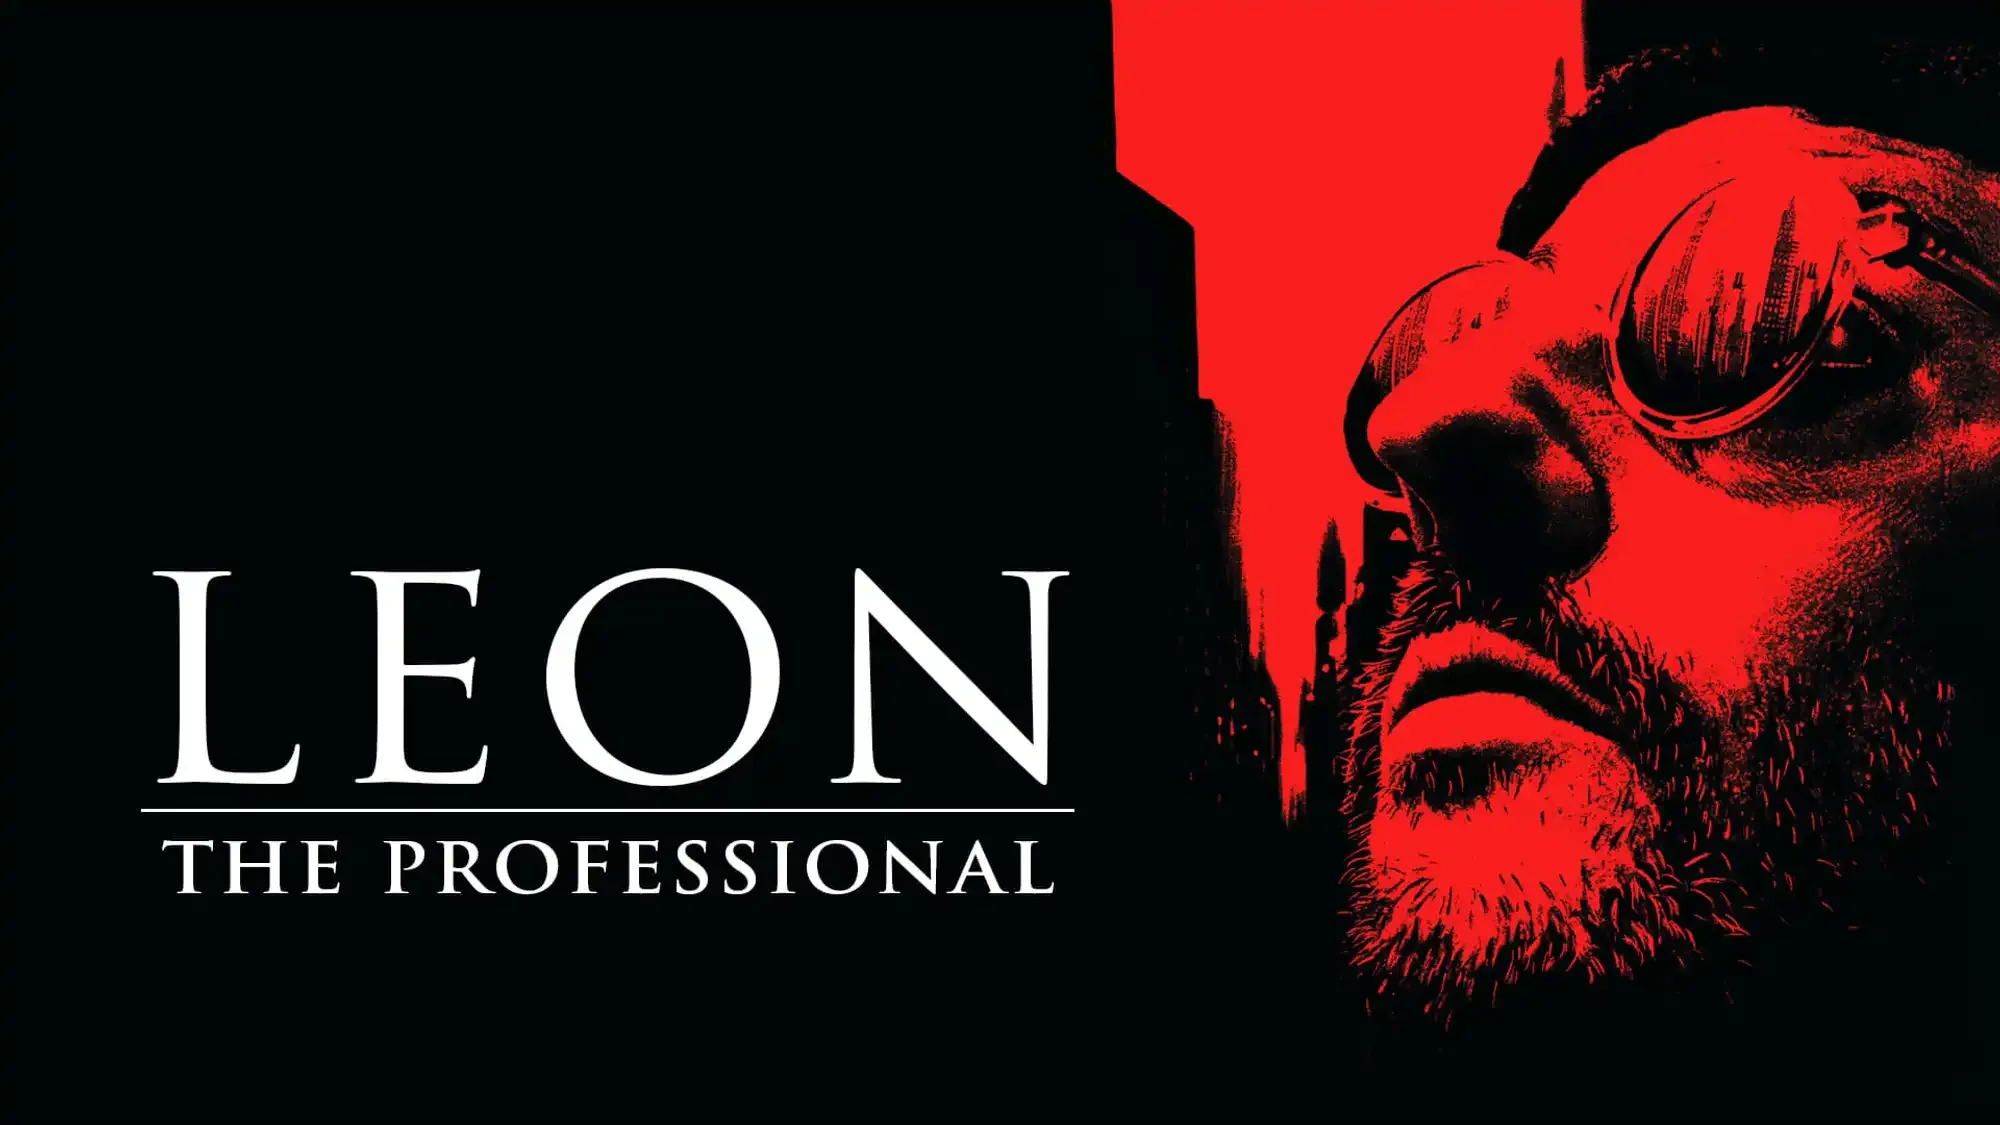 Léon: The Professional movie review